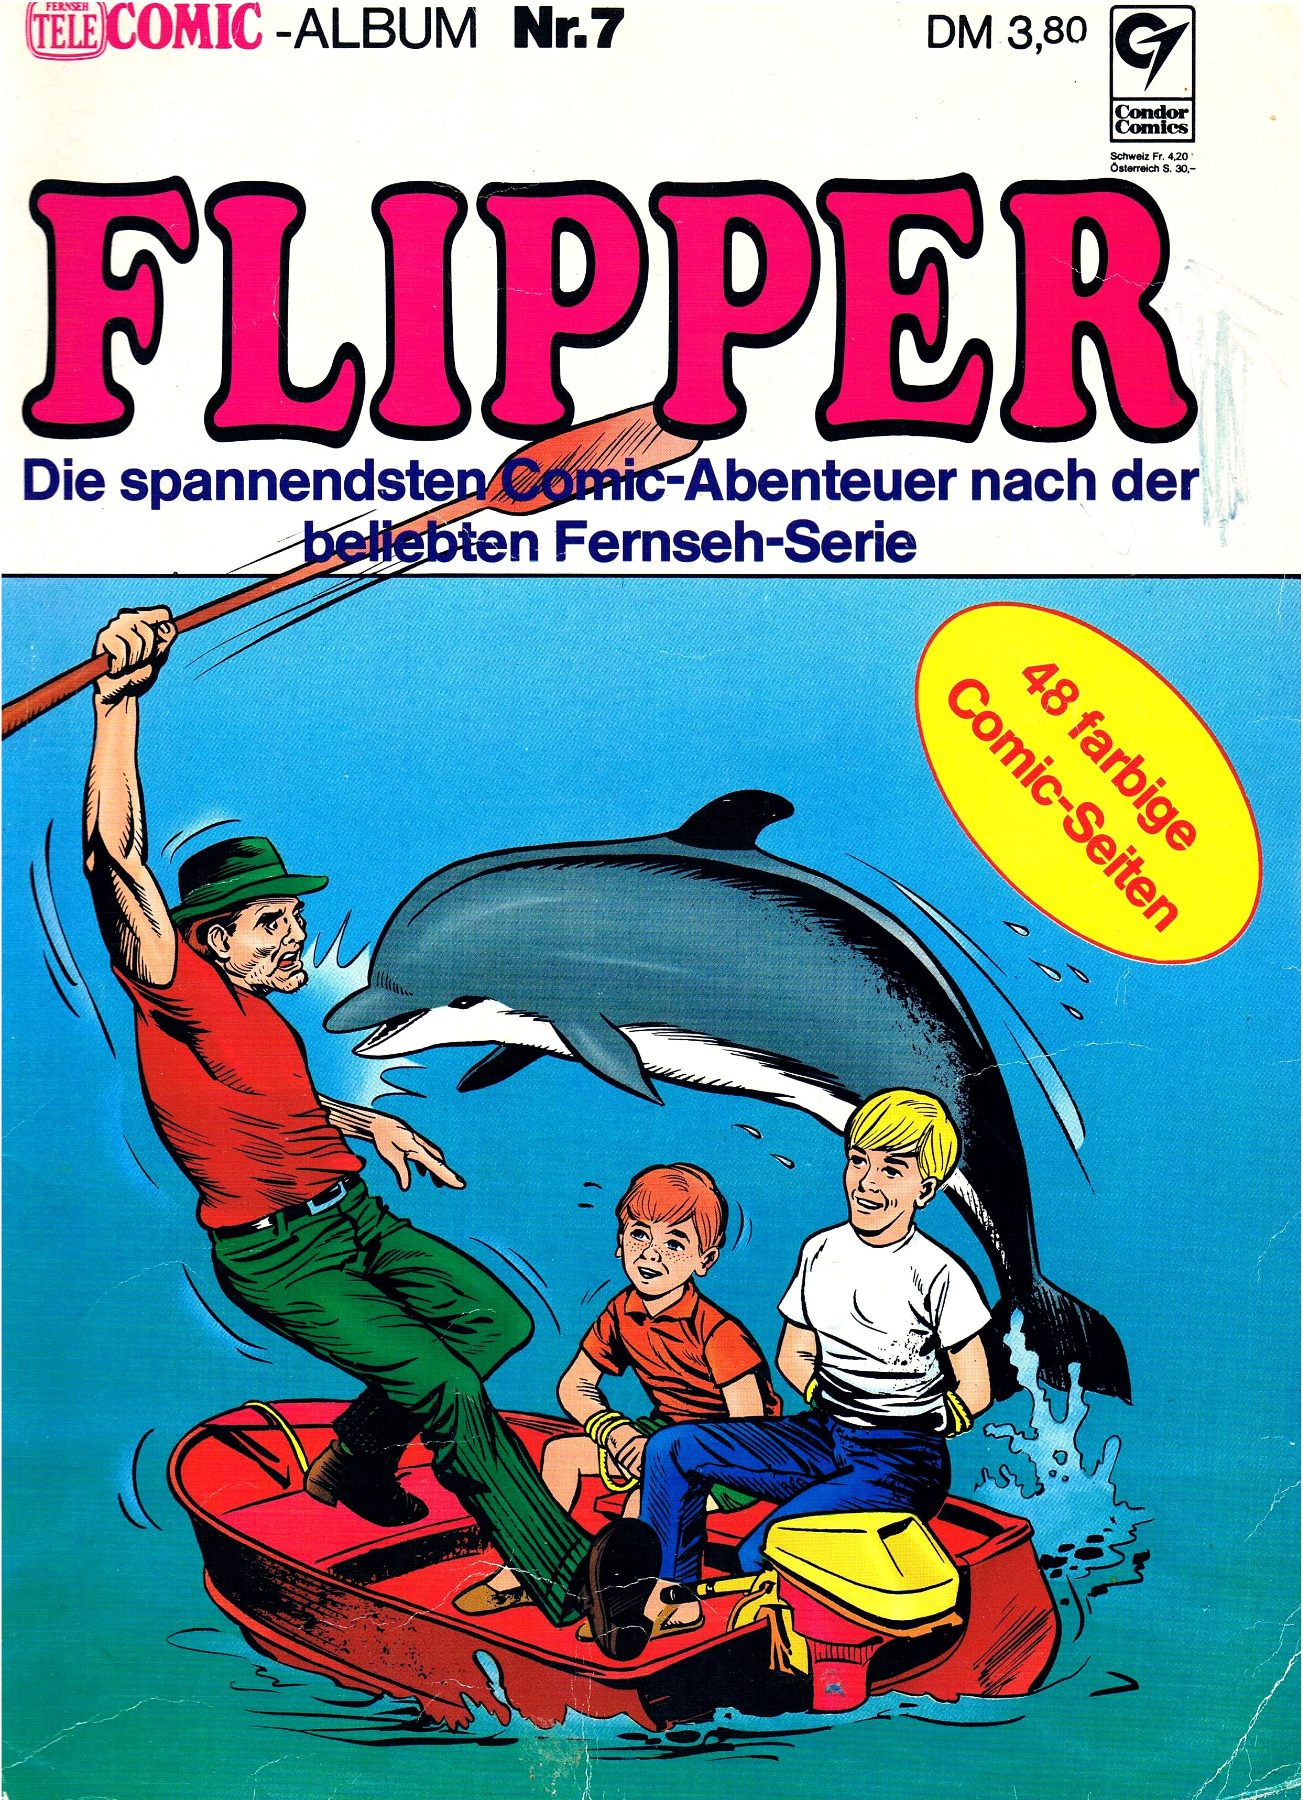 Flipper - Fernseh Tele Comic-Album Nr. 7 1976 Condor Comics